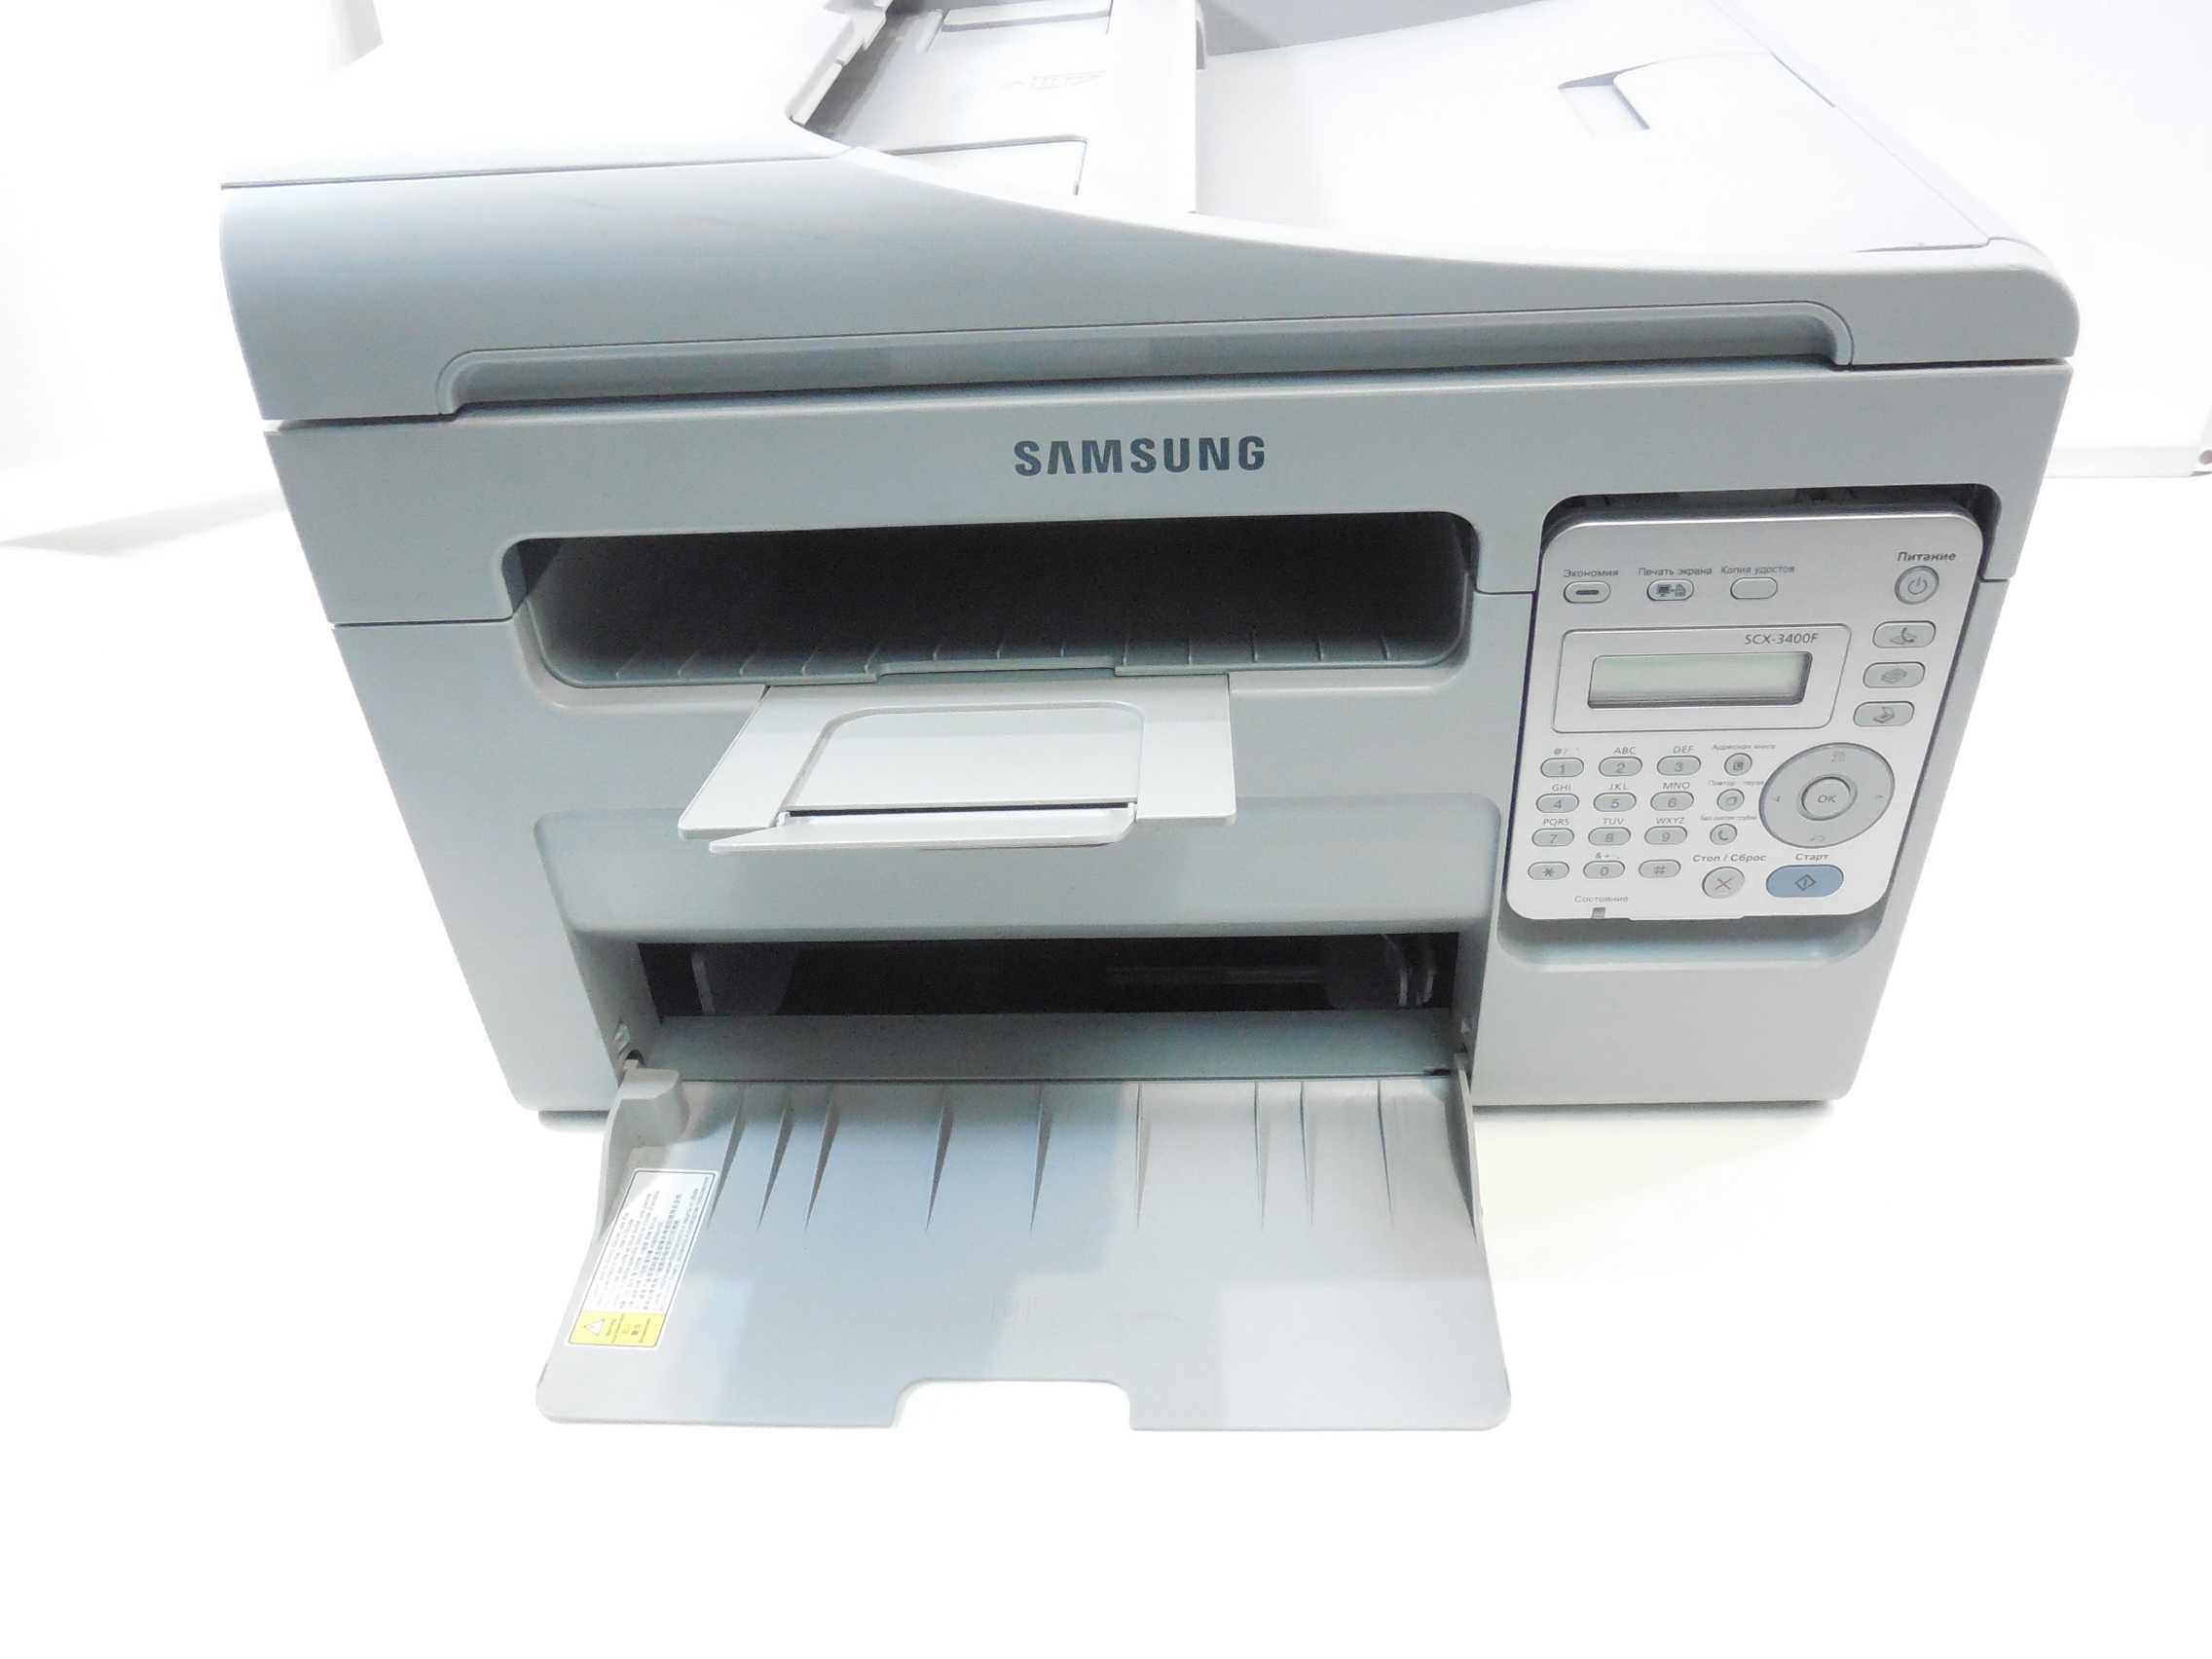 Samsung scx 3400 series. МФУ Samsung SCX-3400. МФУ Samsung 3400. Самсунг принтер сканер копир SCX-3400. МФУ лазерный самсунг 3400.